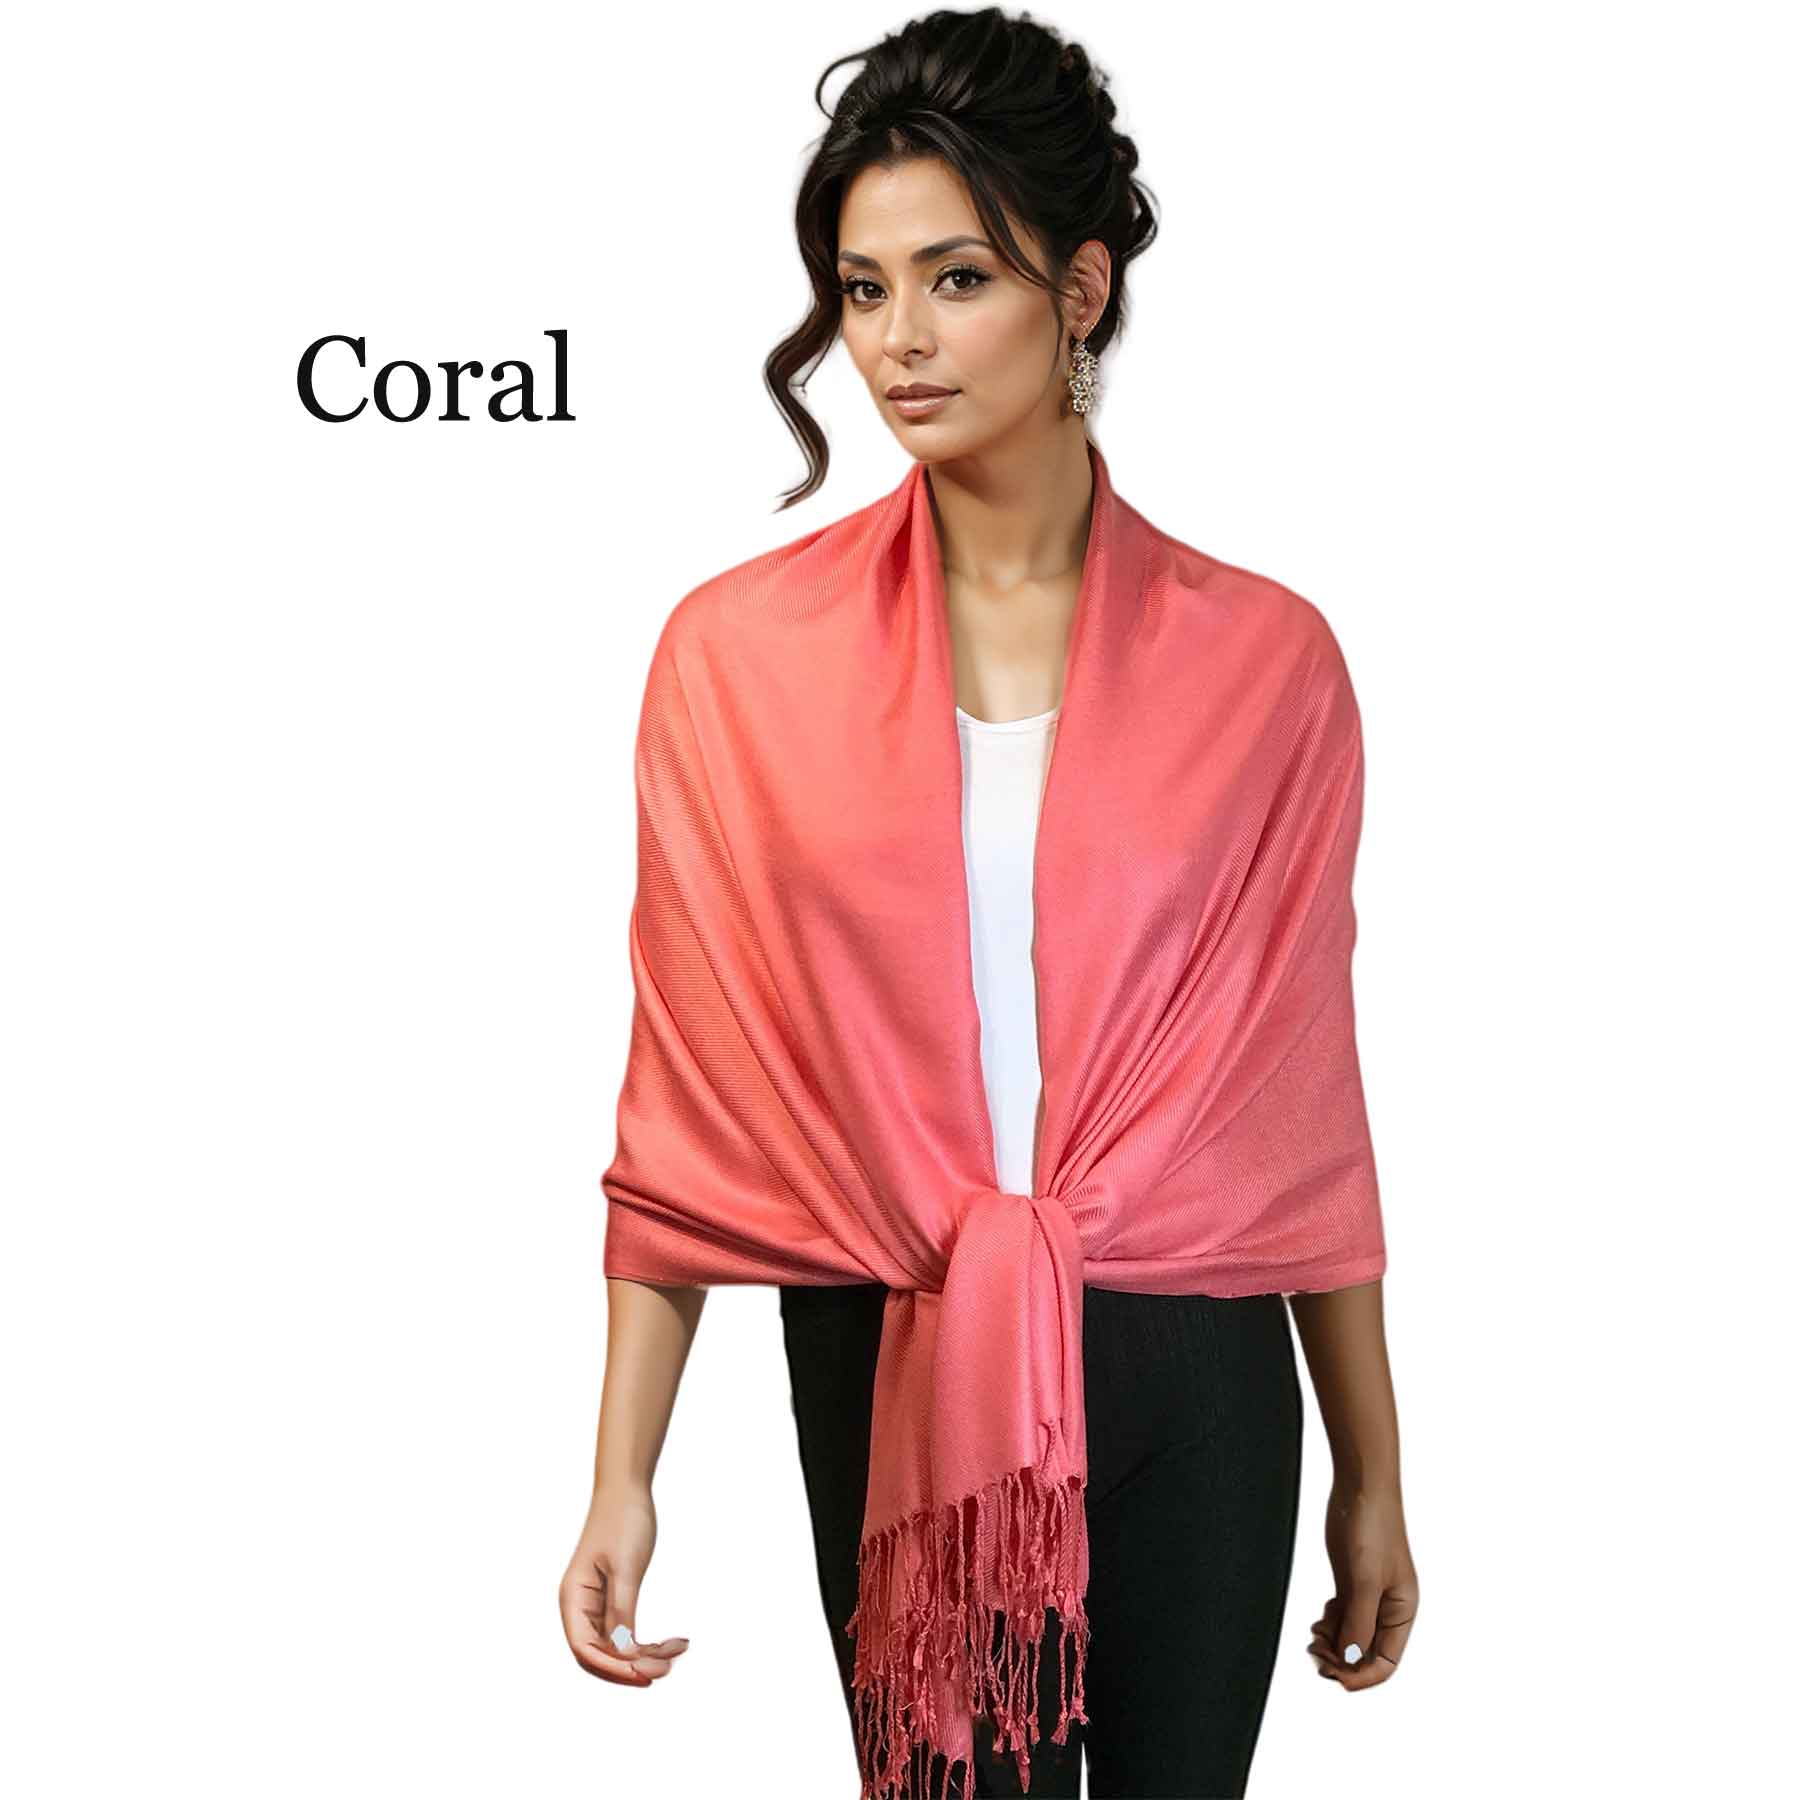 Coral #21<br>
Pashmina Style Shawl